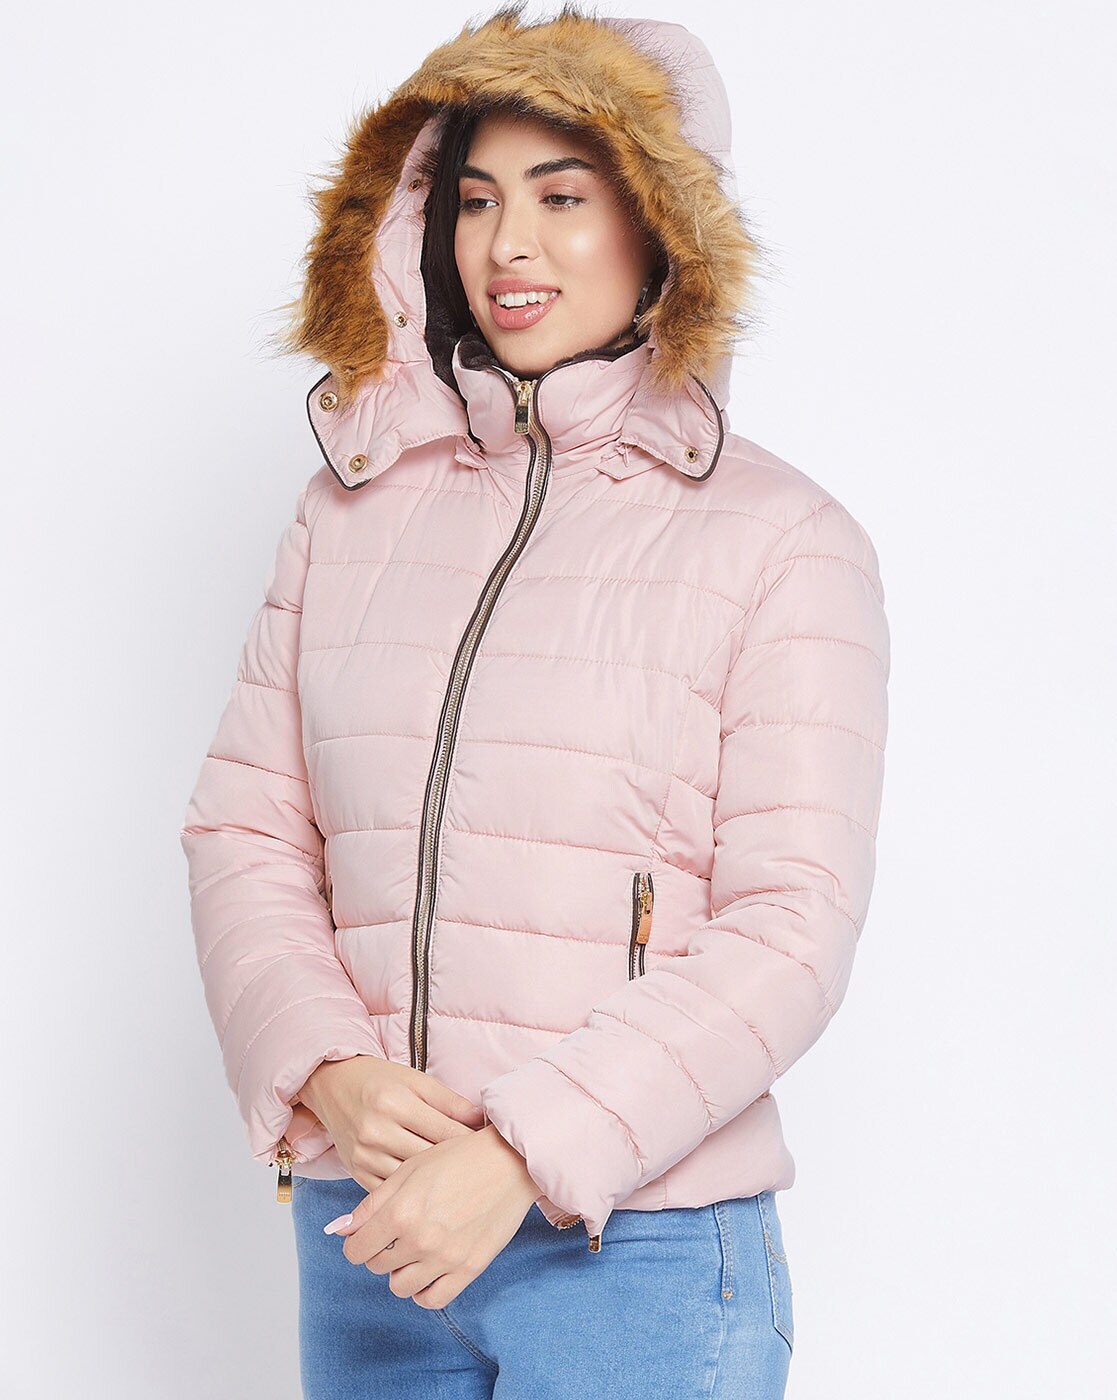 Madame - Winter Essentials include a Pink Jacket for Sure. Shop more  Glamly.com #Madame #BeEveryoneUR #WinterHues #Glamly #Jacket | Facebook